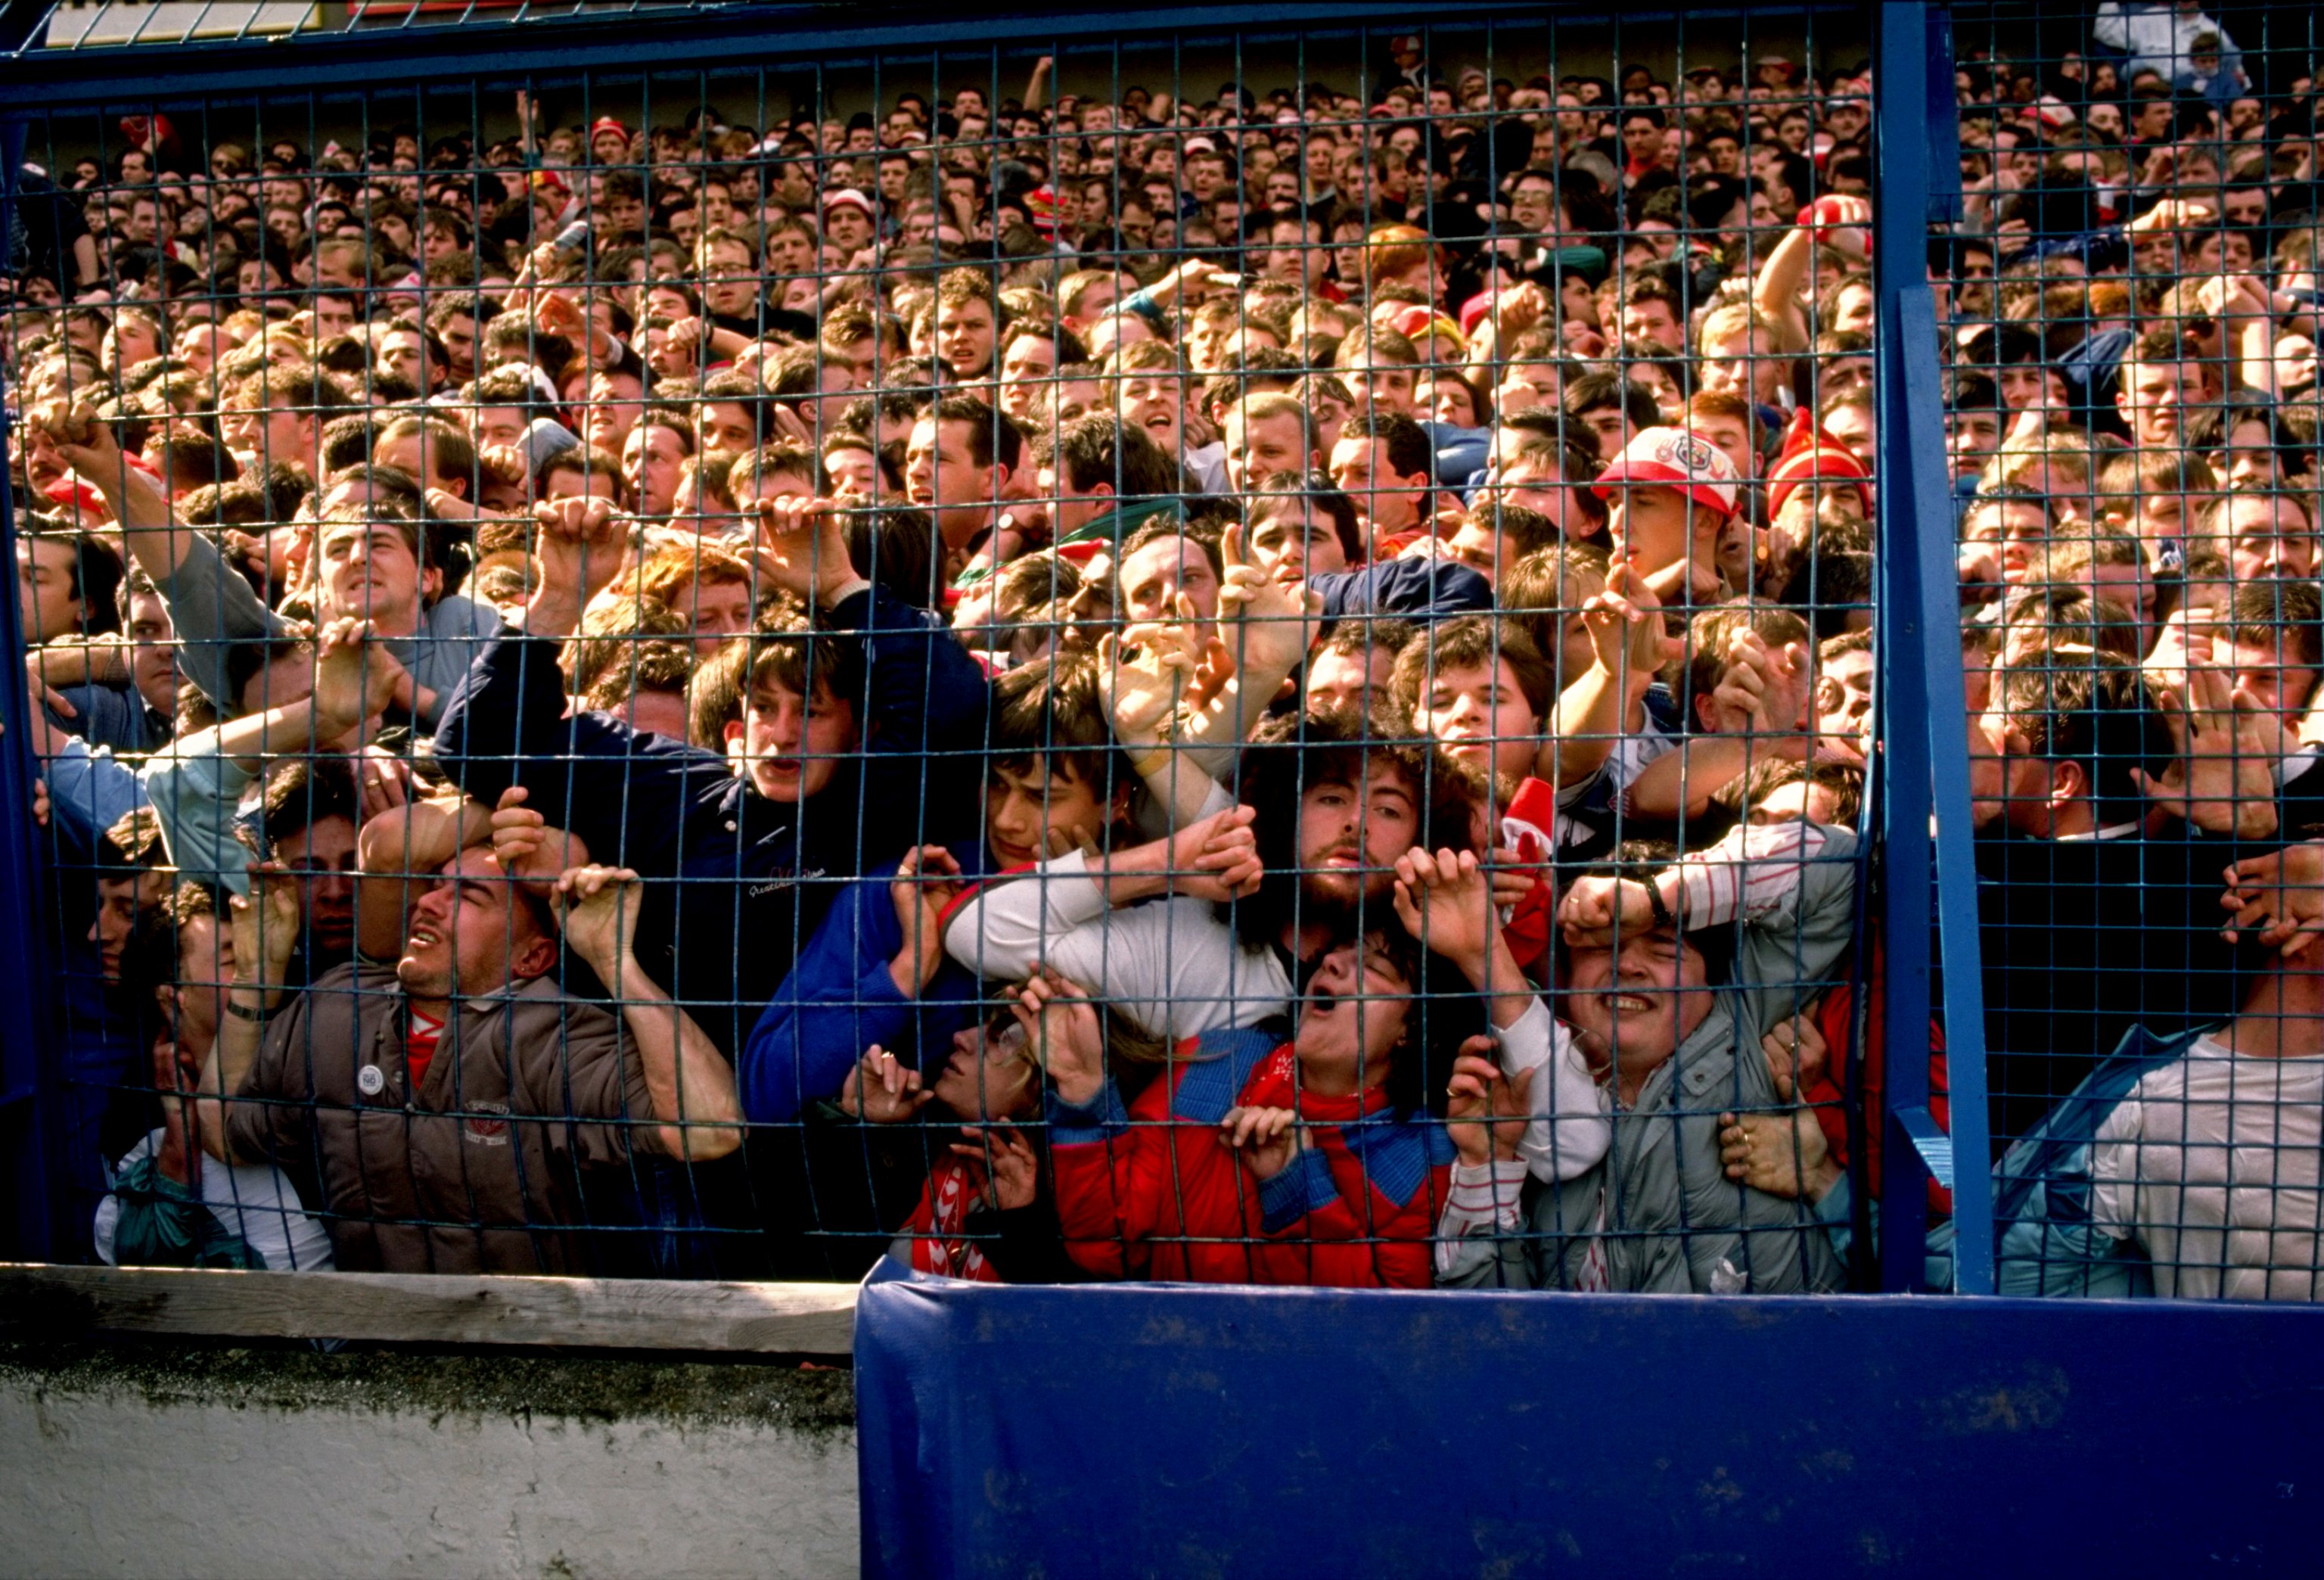 Встреча на стадионе. Стадион Хиллсборо в Шеффилде, 1989. Стадион Хиллсборо Шеффилд. Давка на стадионе Хиллсборо в Шеффилде 1989. 15 Апреля 1989 года на стадионе Хиллсборо в Англии.